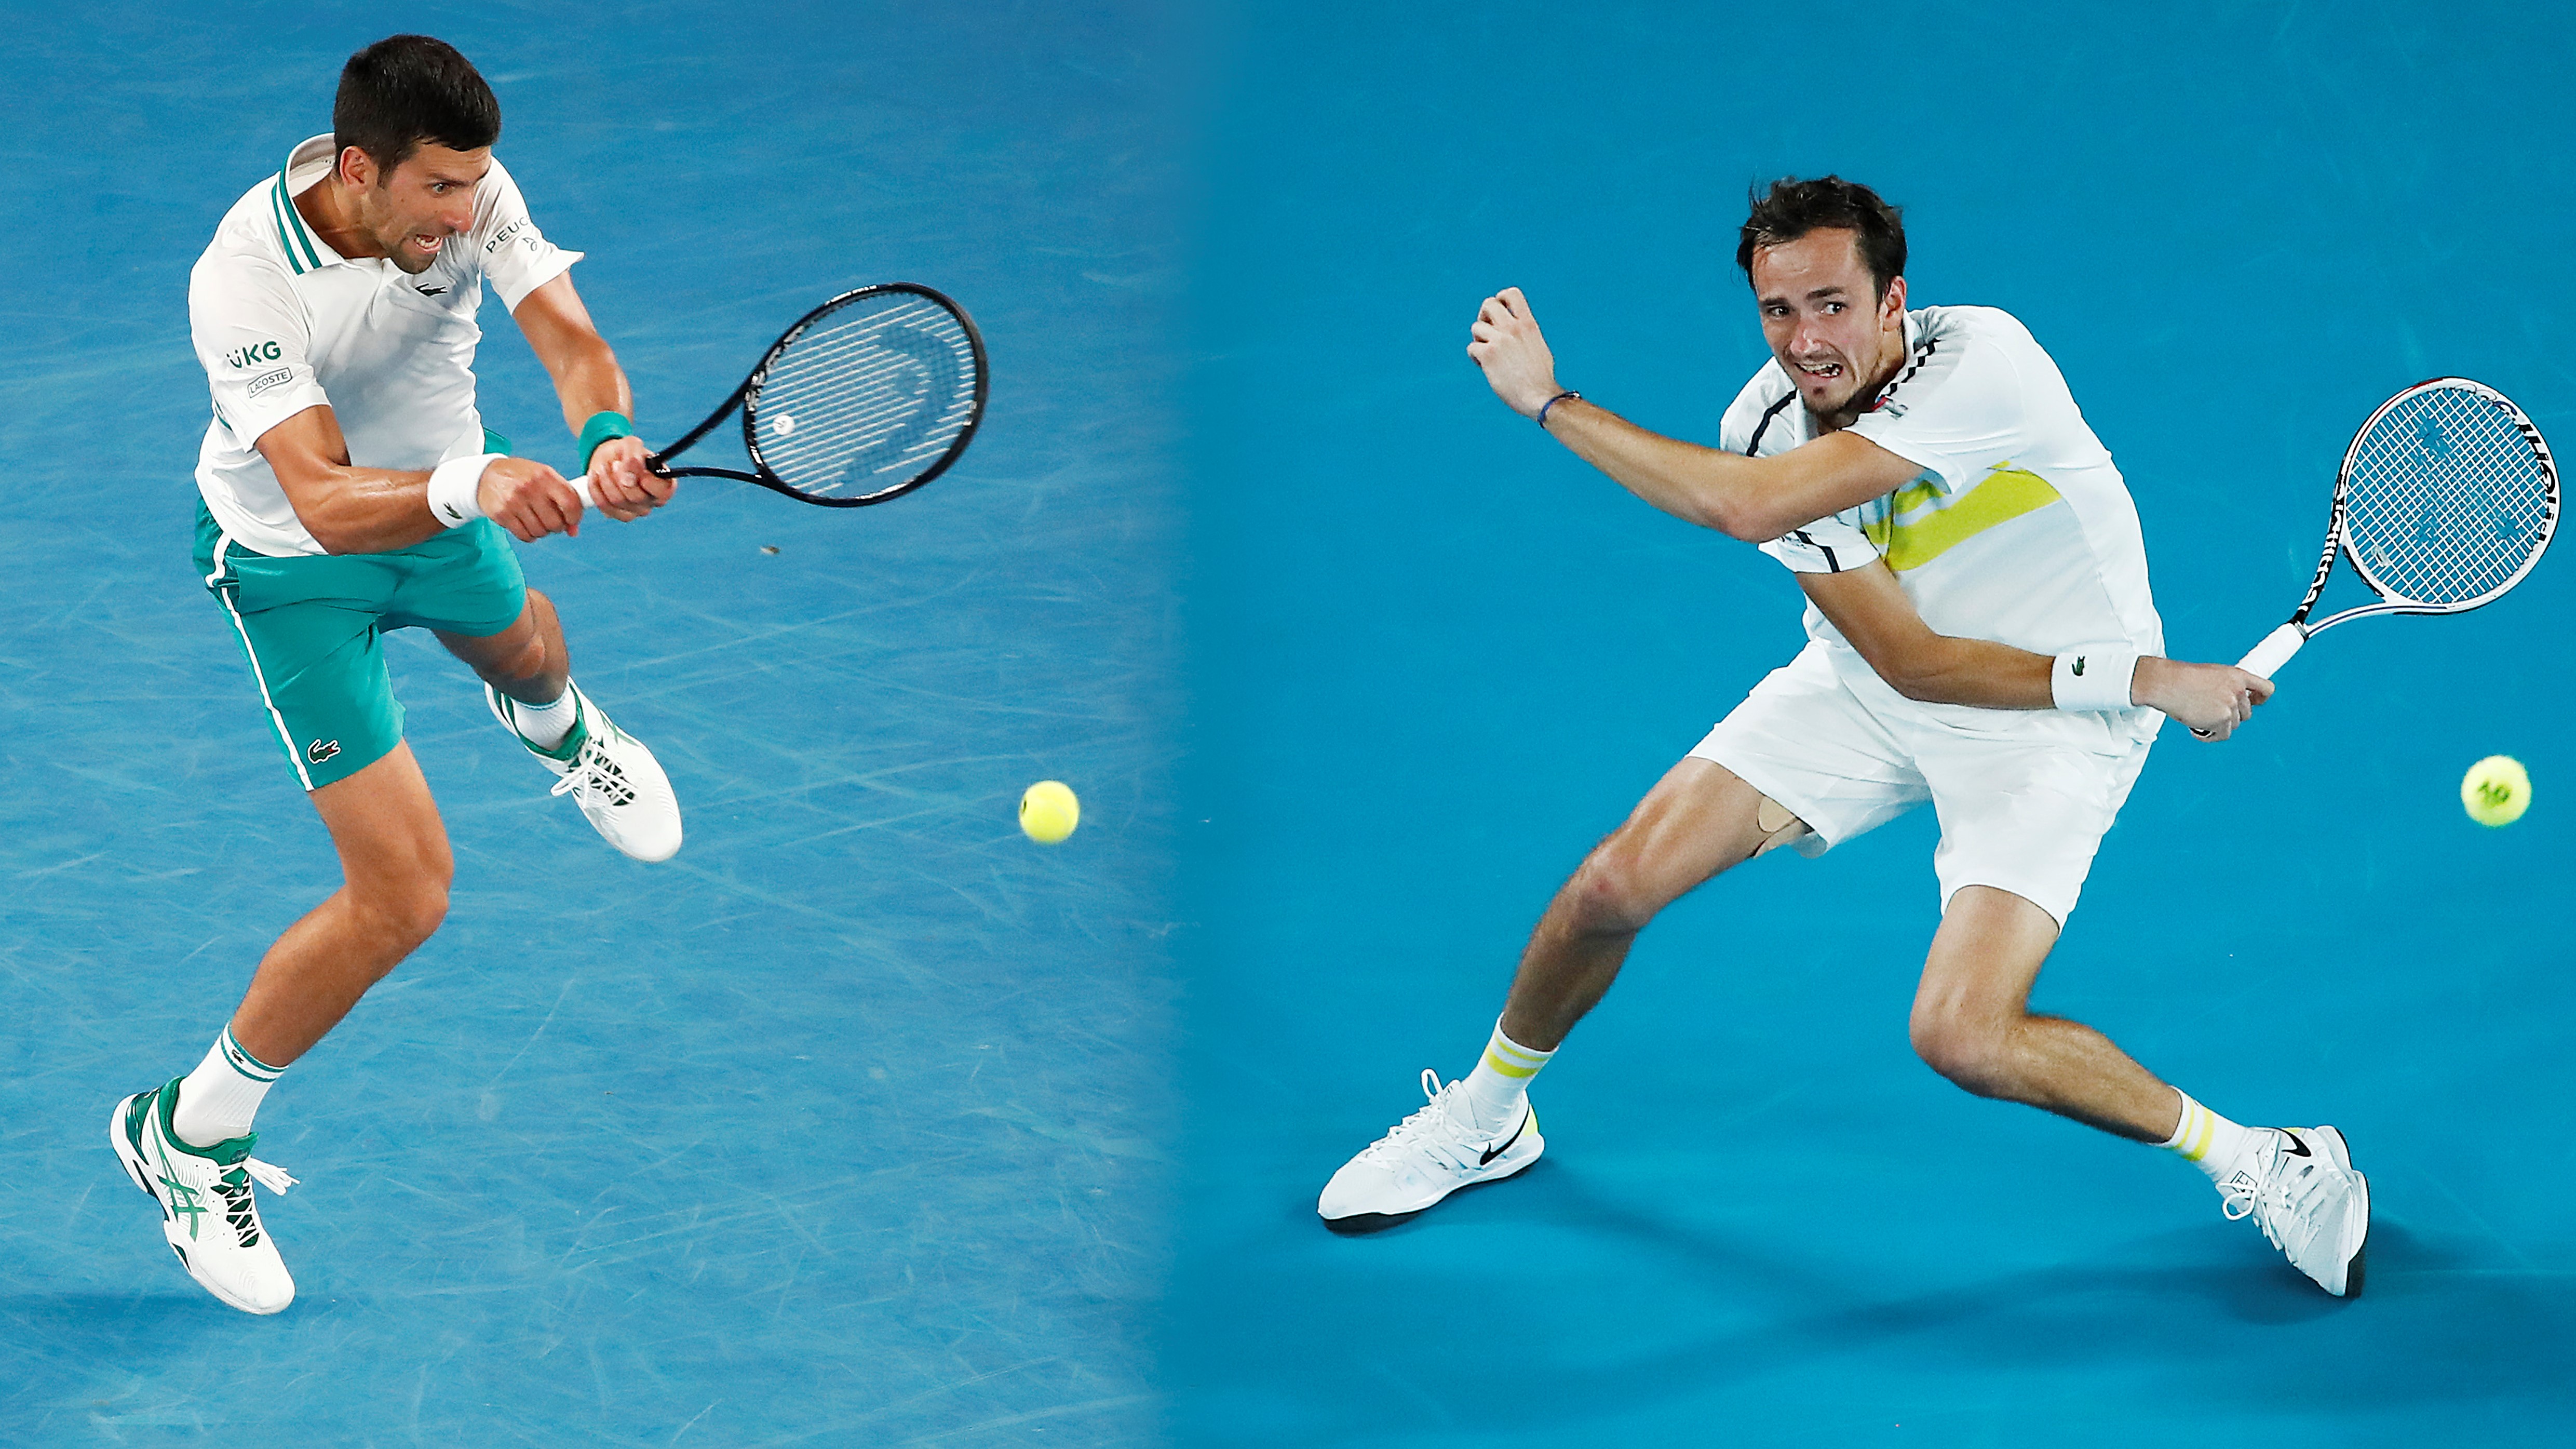 Djokovic vs Medvedev live stream: how watch Australian Open 2021 final anywhere | TechRadar